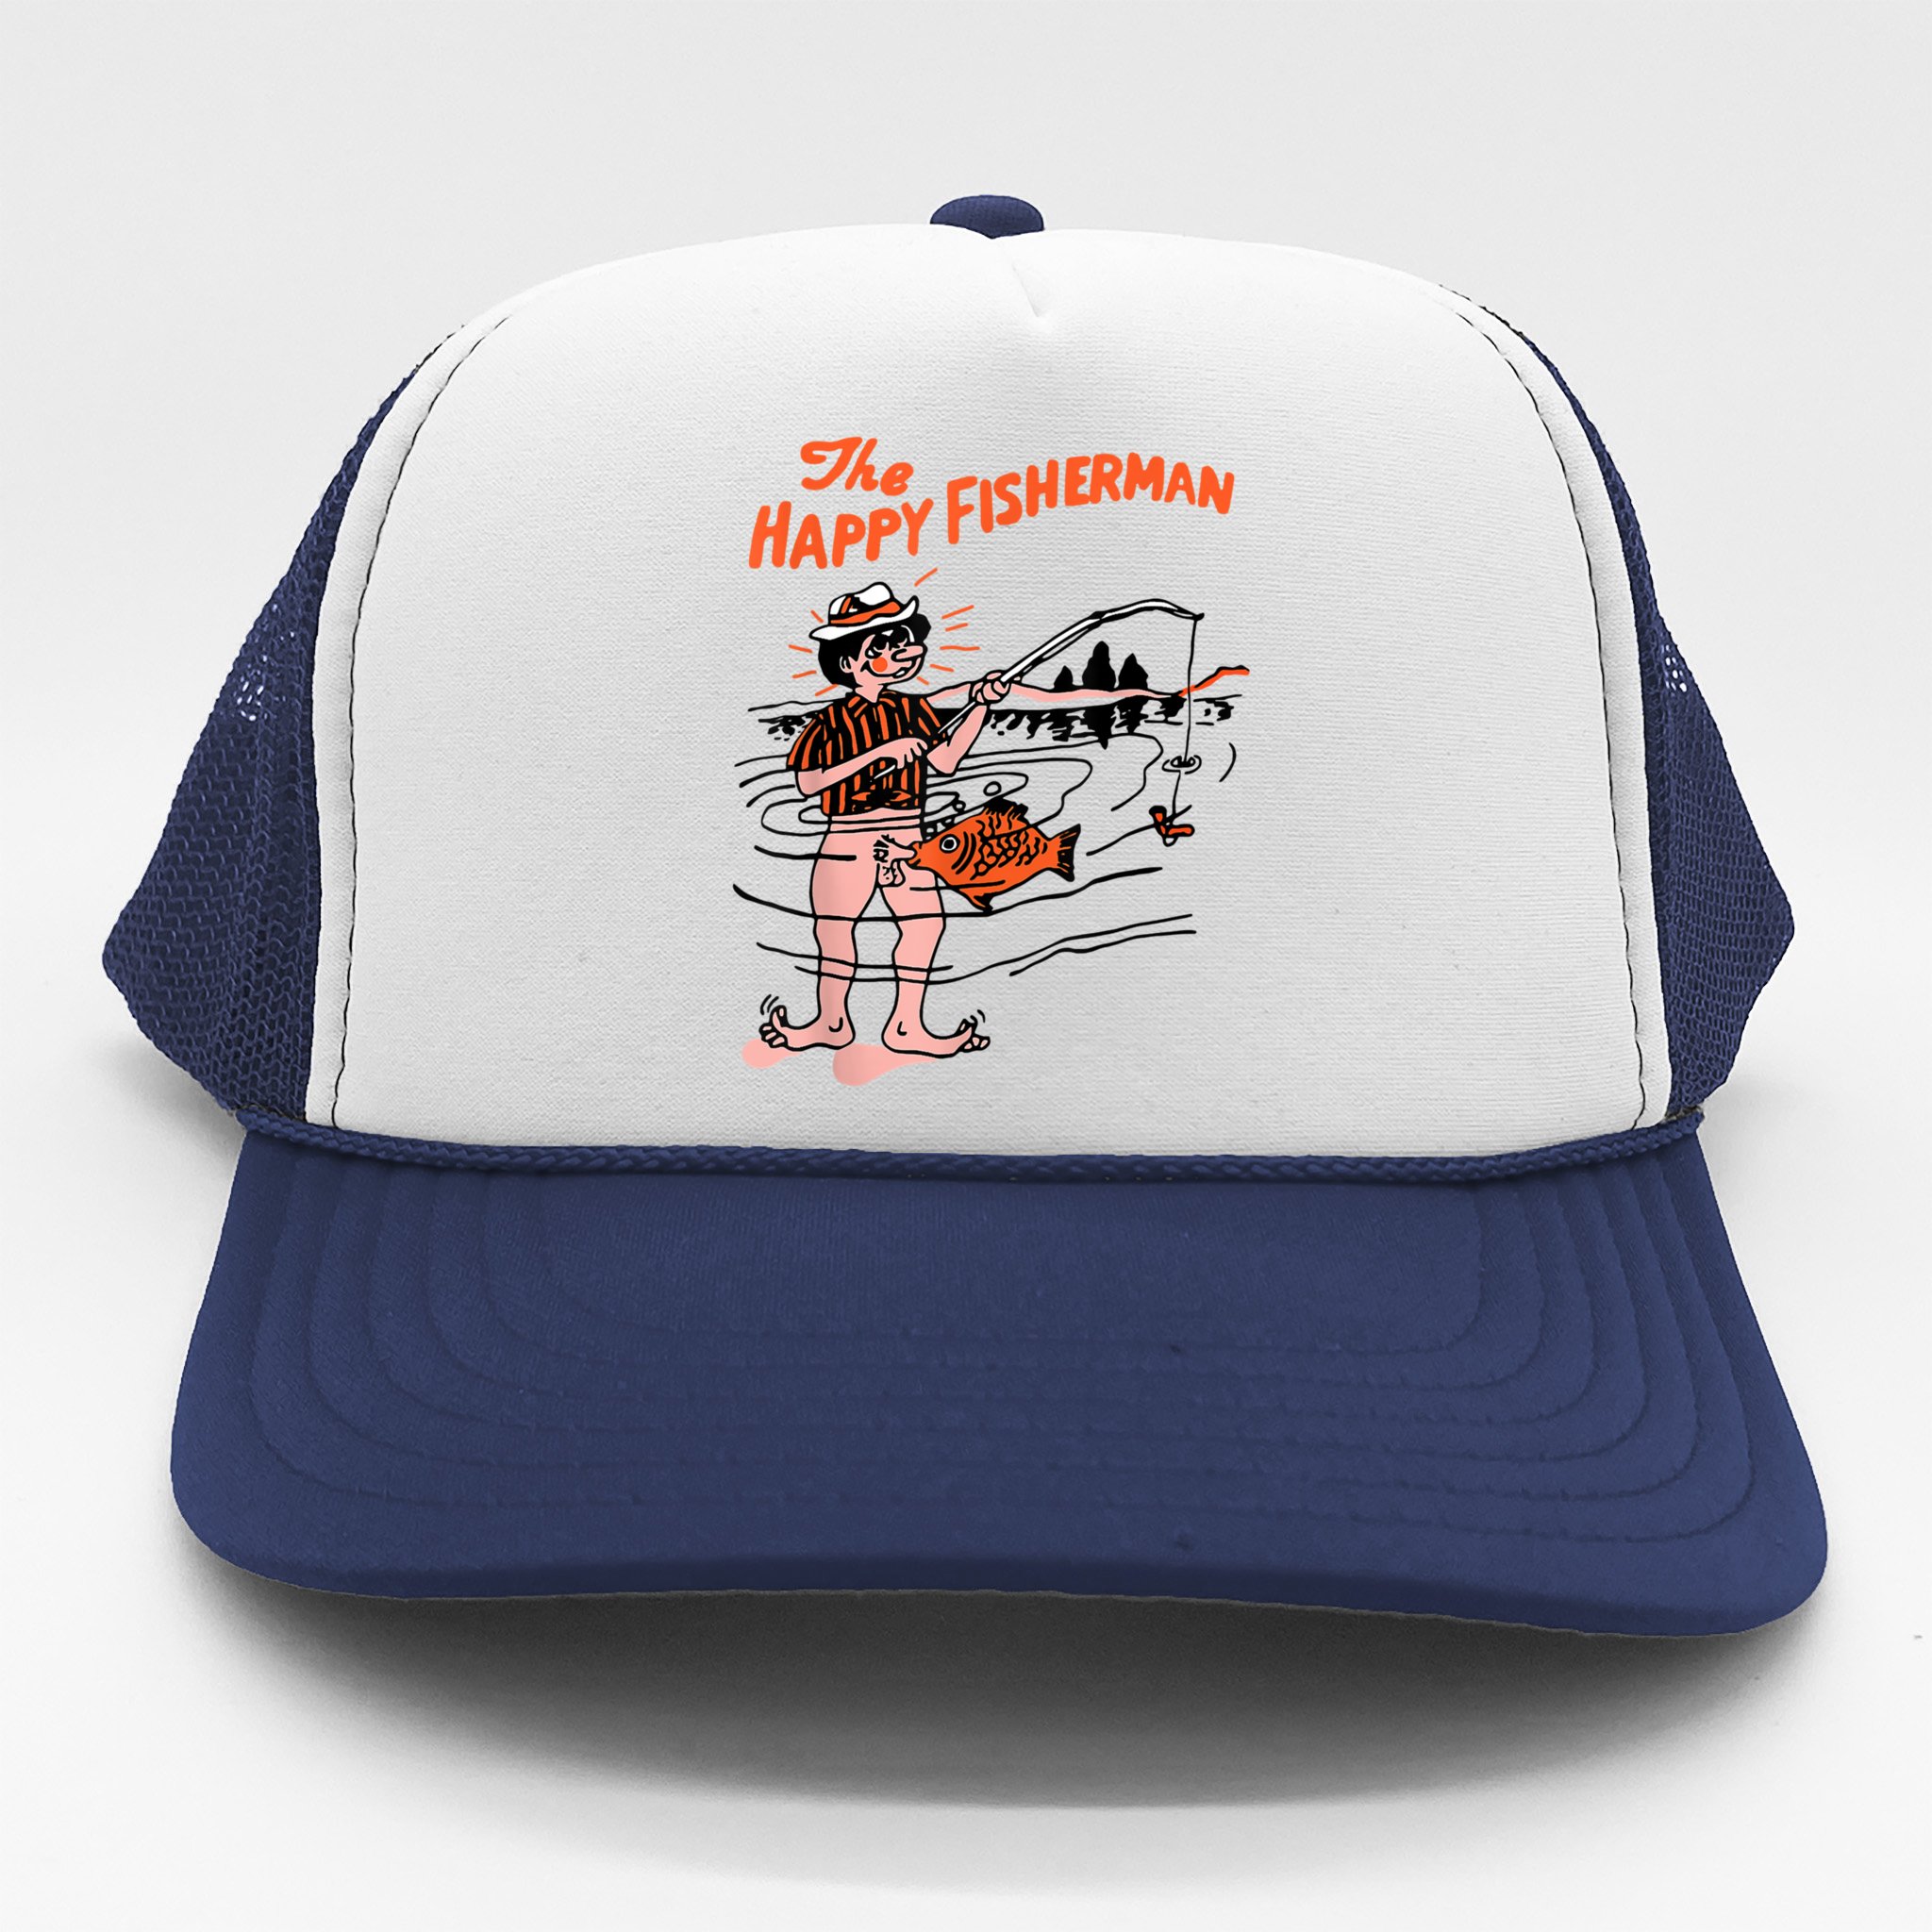 The Happy Fisherman Happiest Fish Funny BJ Trucker Hat